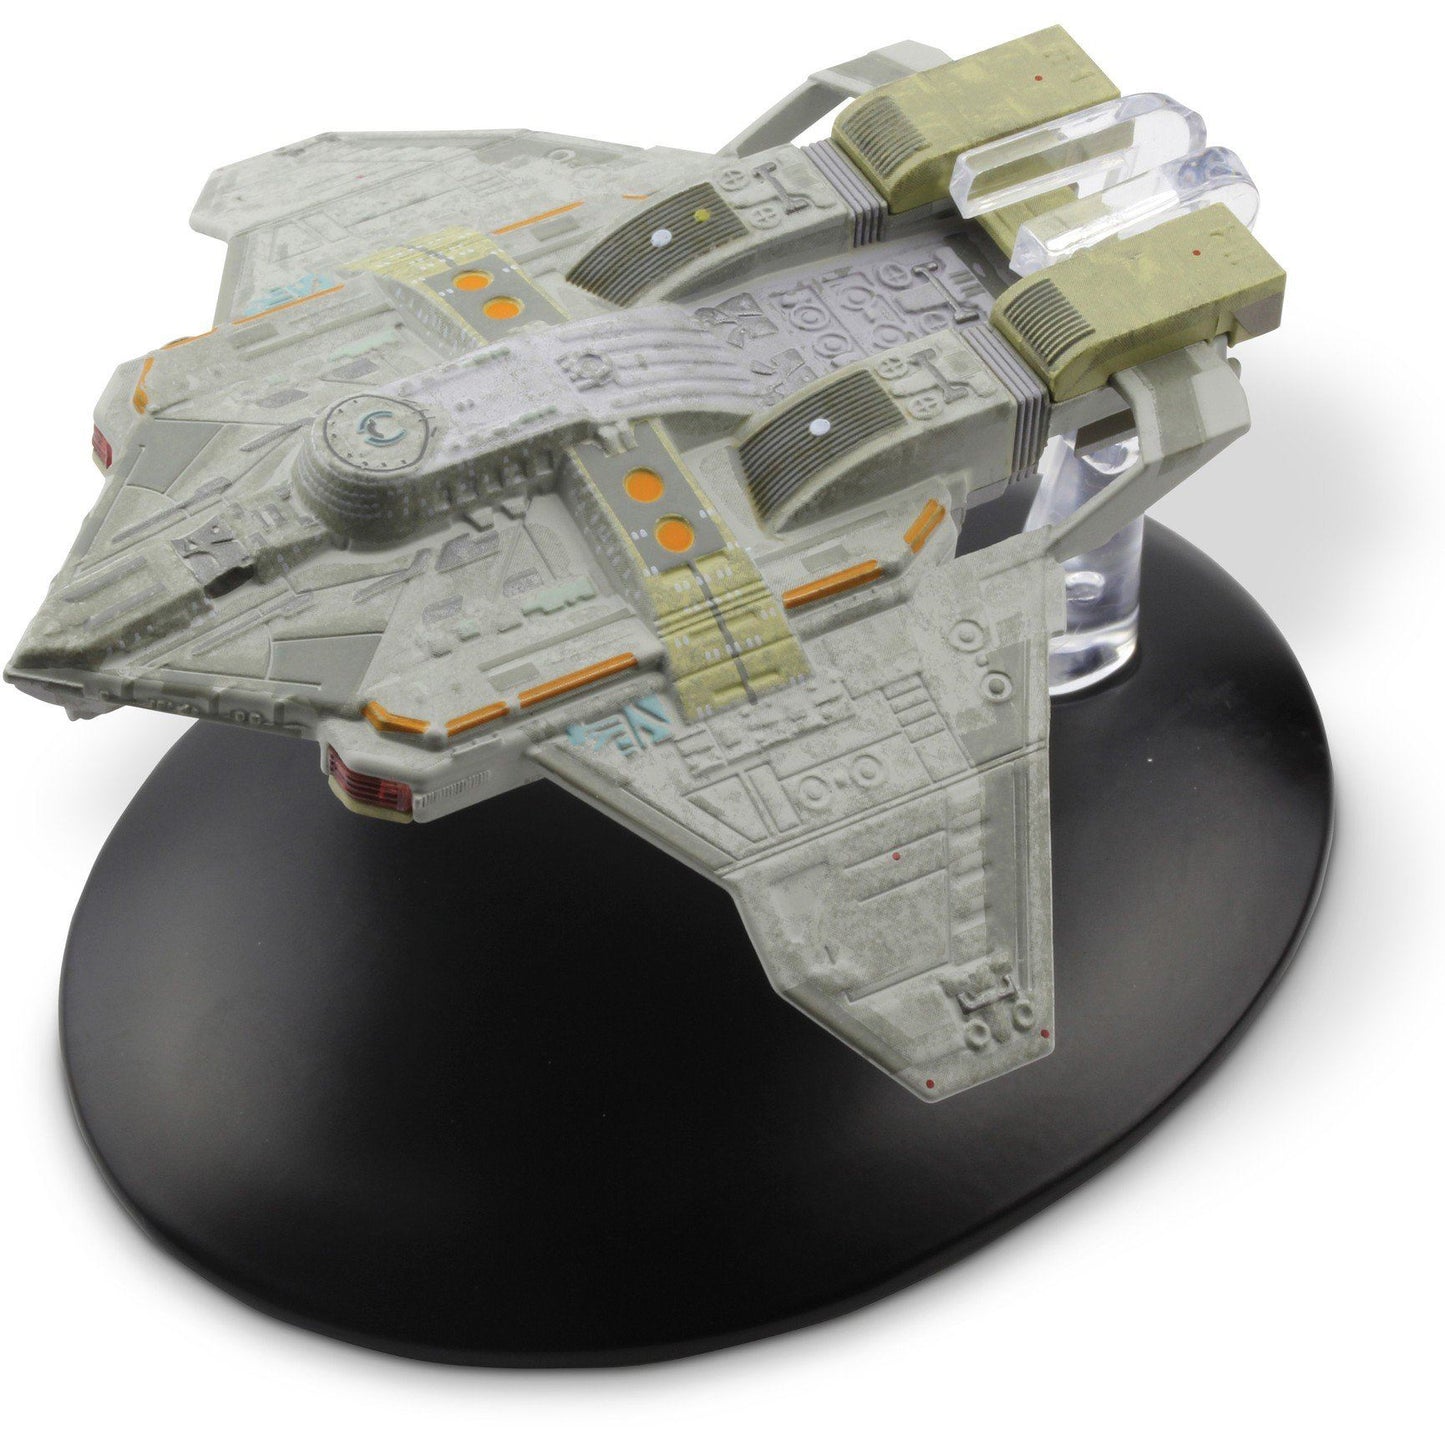 #145 Nightingale Model Die Cast Ship (Eaglemoss / Star Trek)